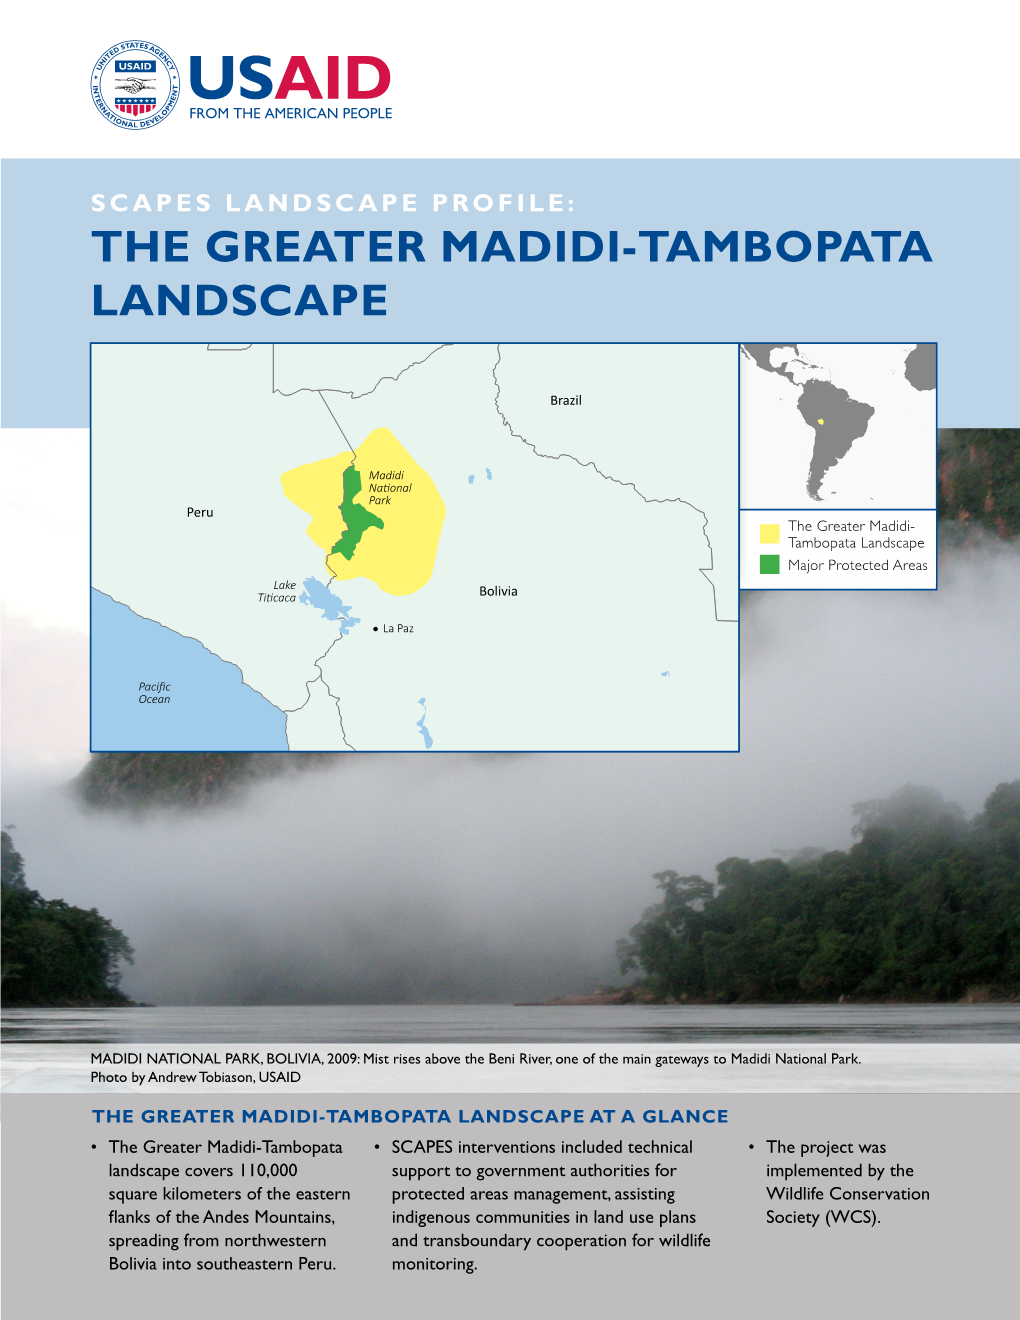 The Greater Madidi-Tambopata Landscape